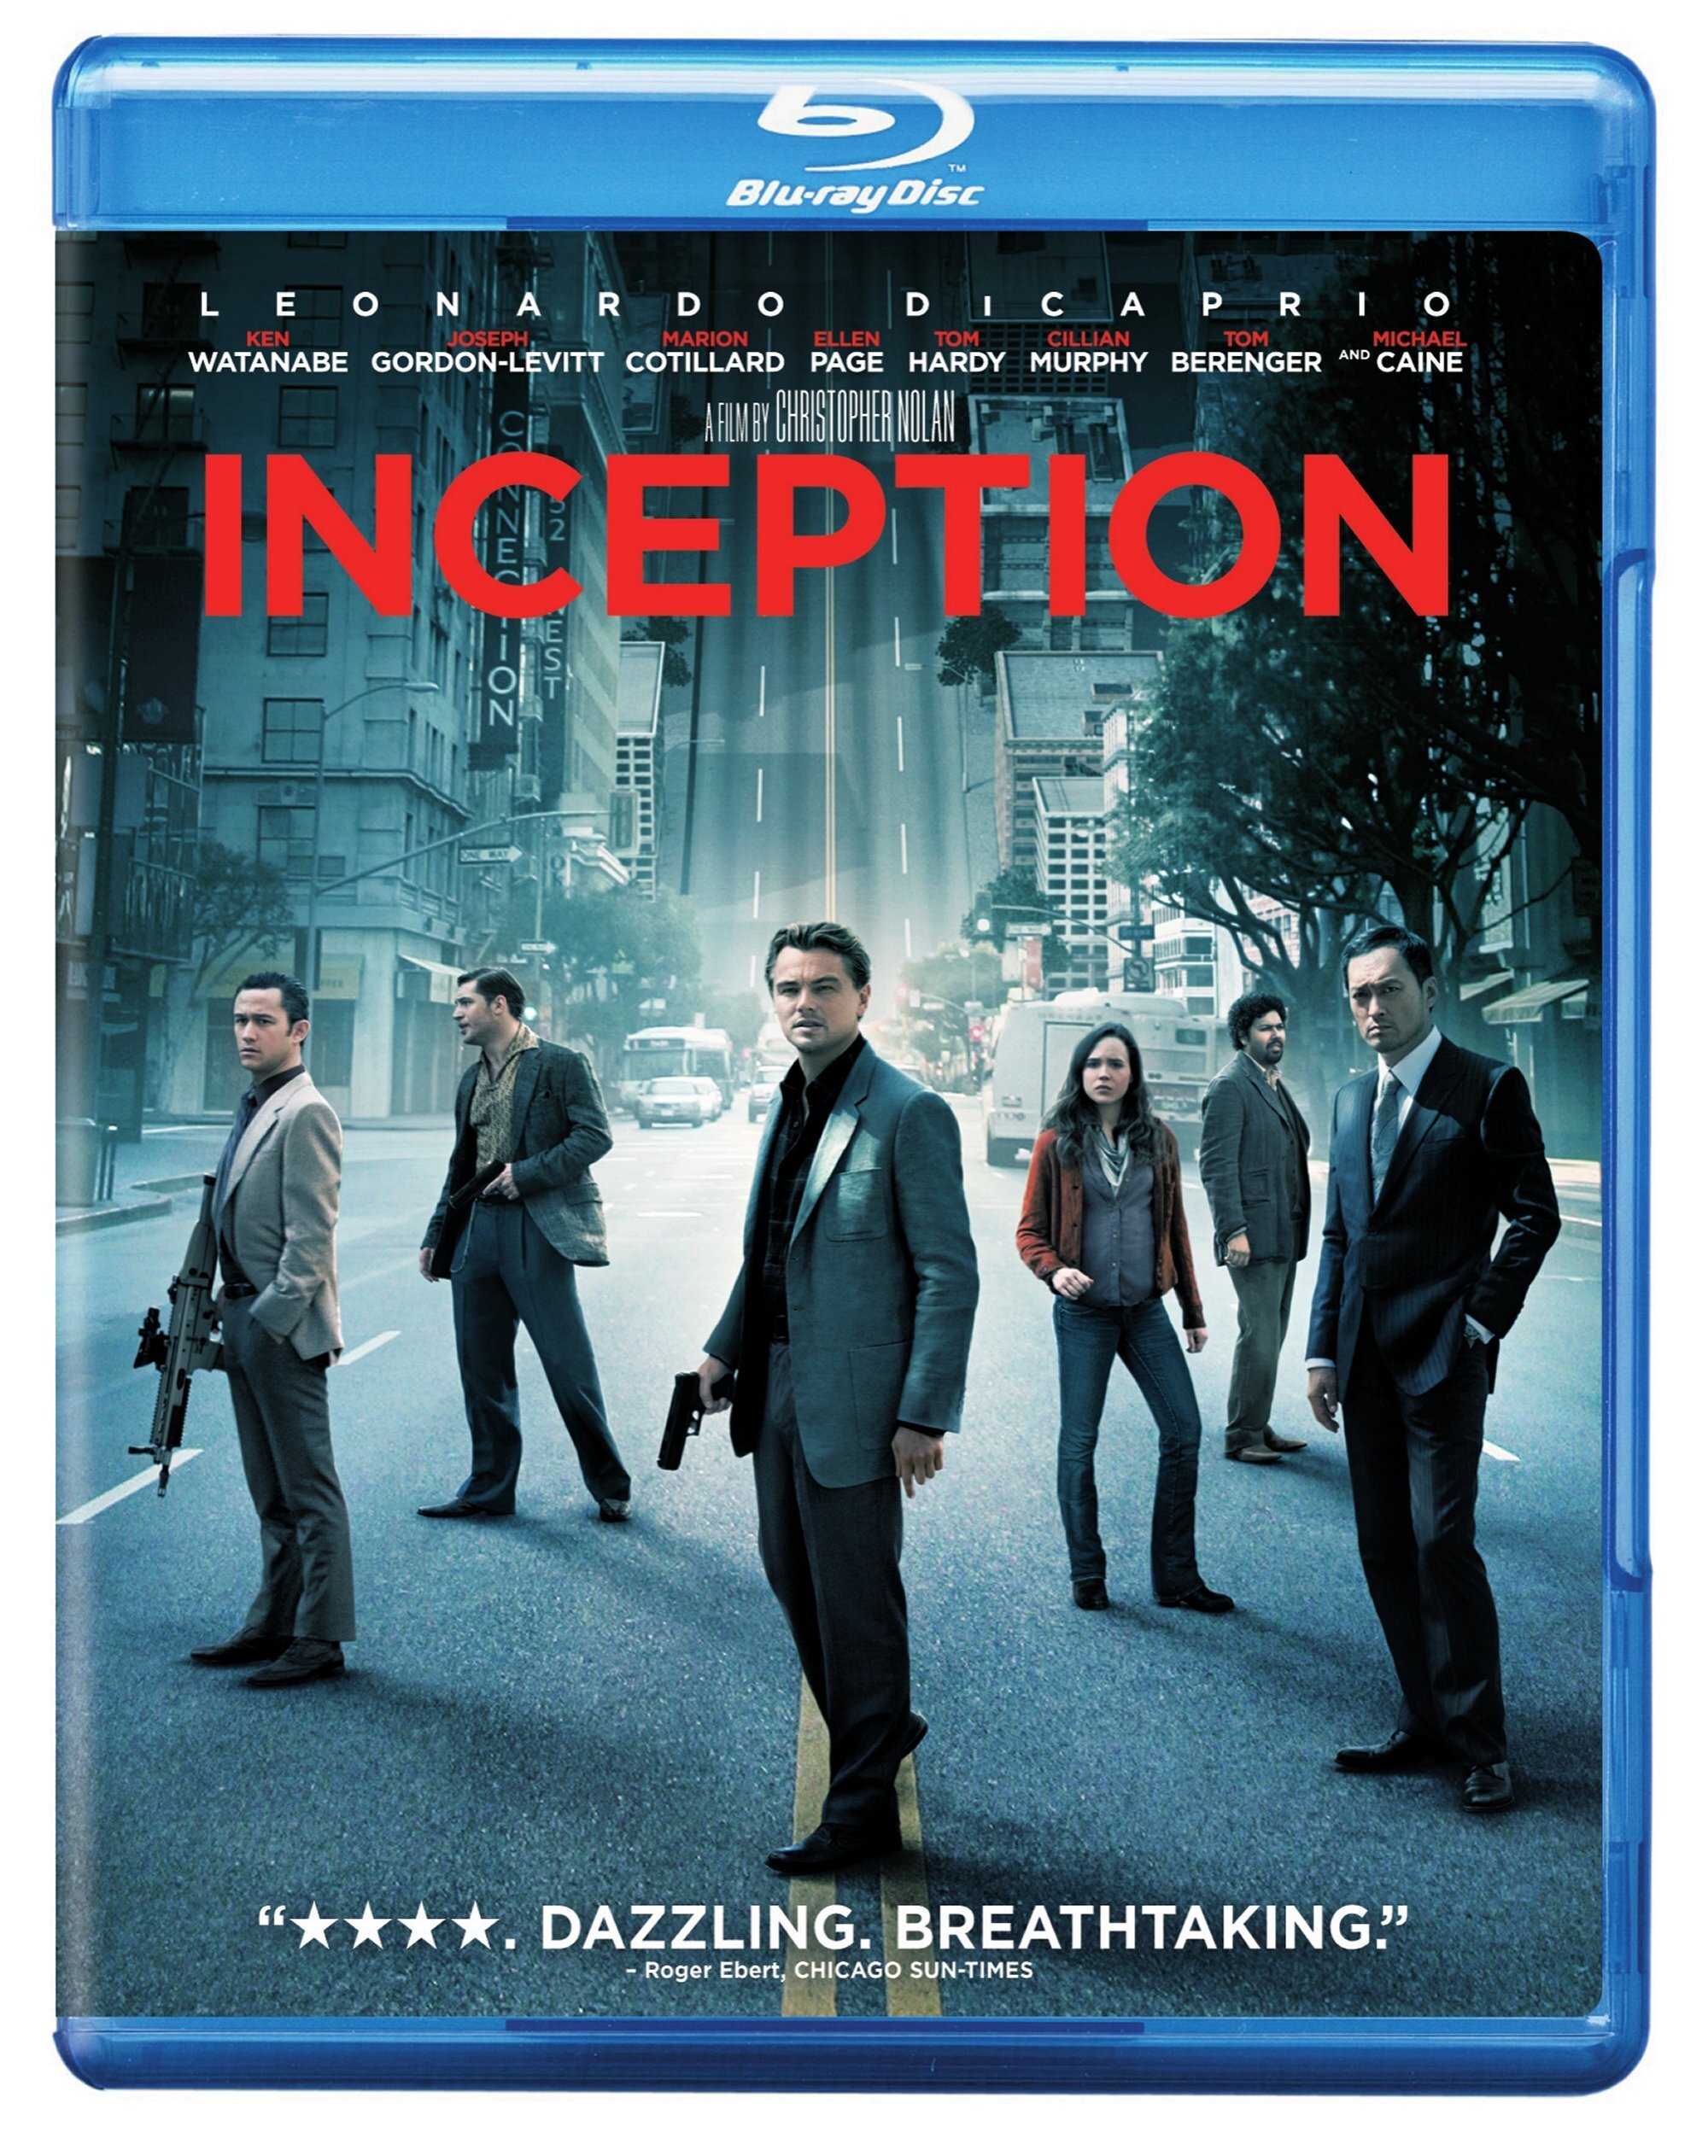 Inception (Blu-ray New Box Art) - Blu-ray [ 2010 ]  - Sci Fi Movies On Blu-ray - Movies On GRUV